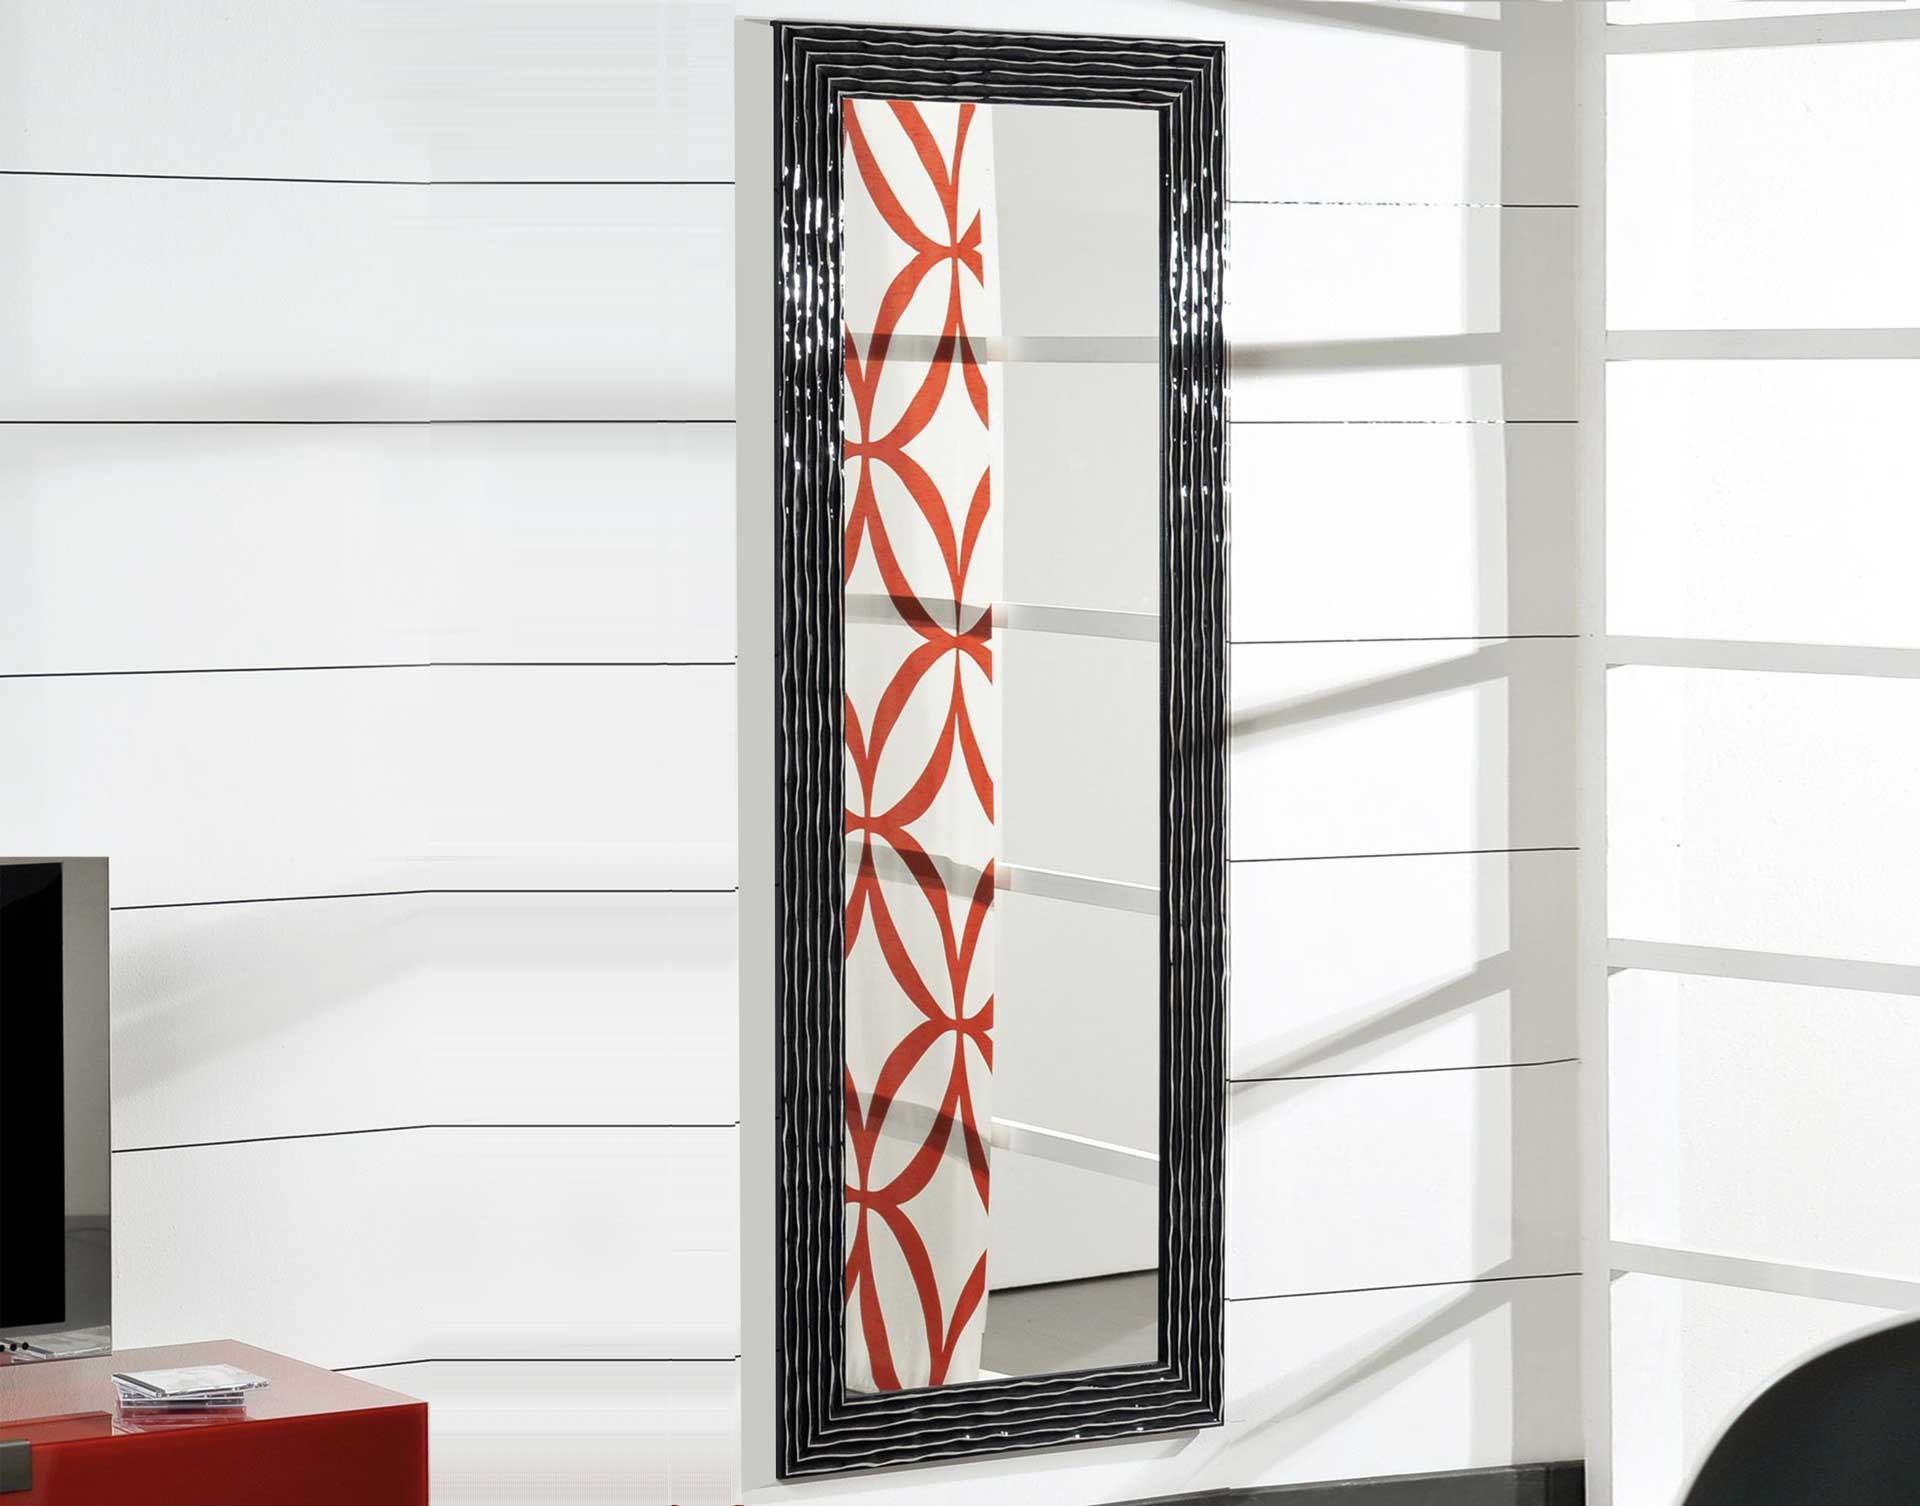 Bodenspiegel Modell Elisa, Farbe: glänzend schwarz lackiert, Style modern, an der Wand 